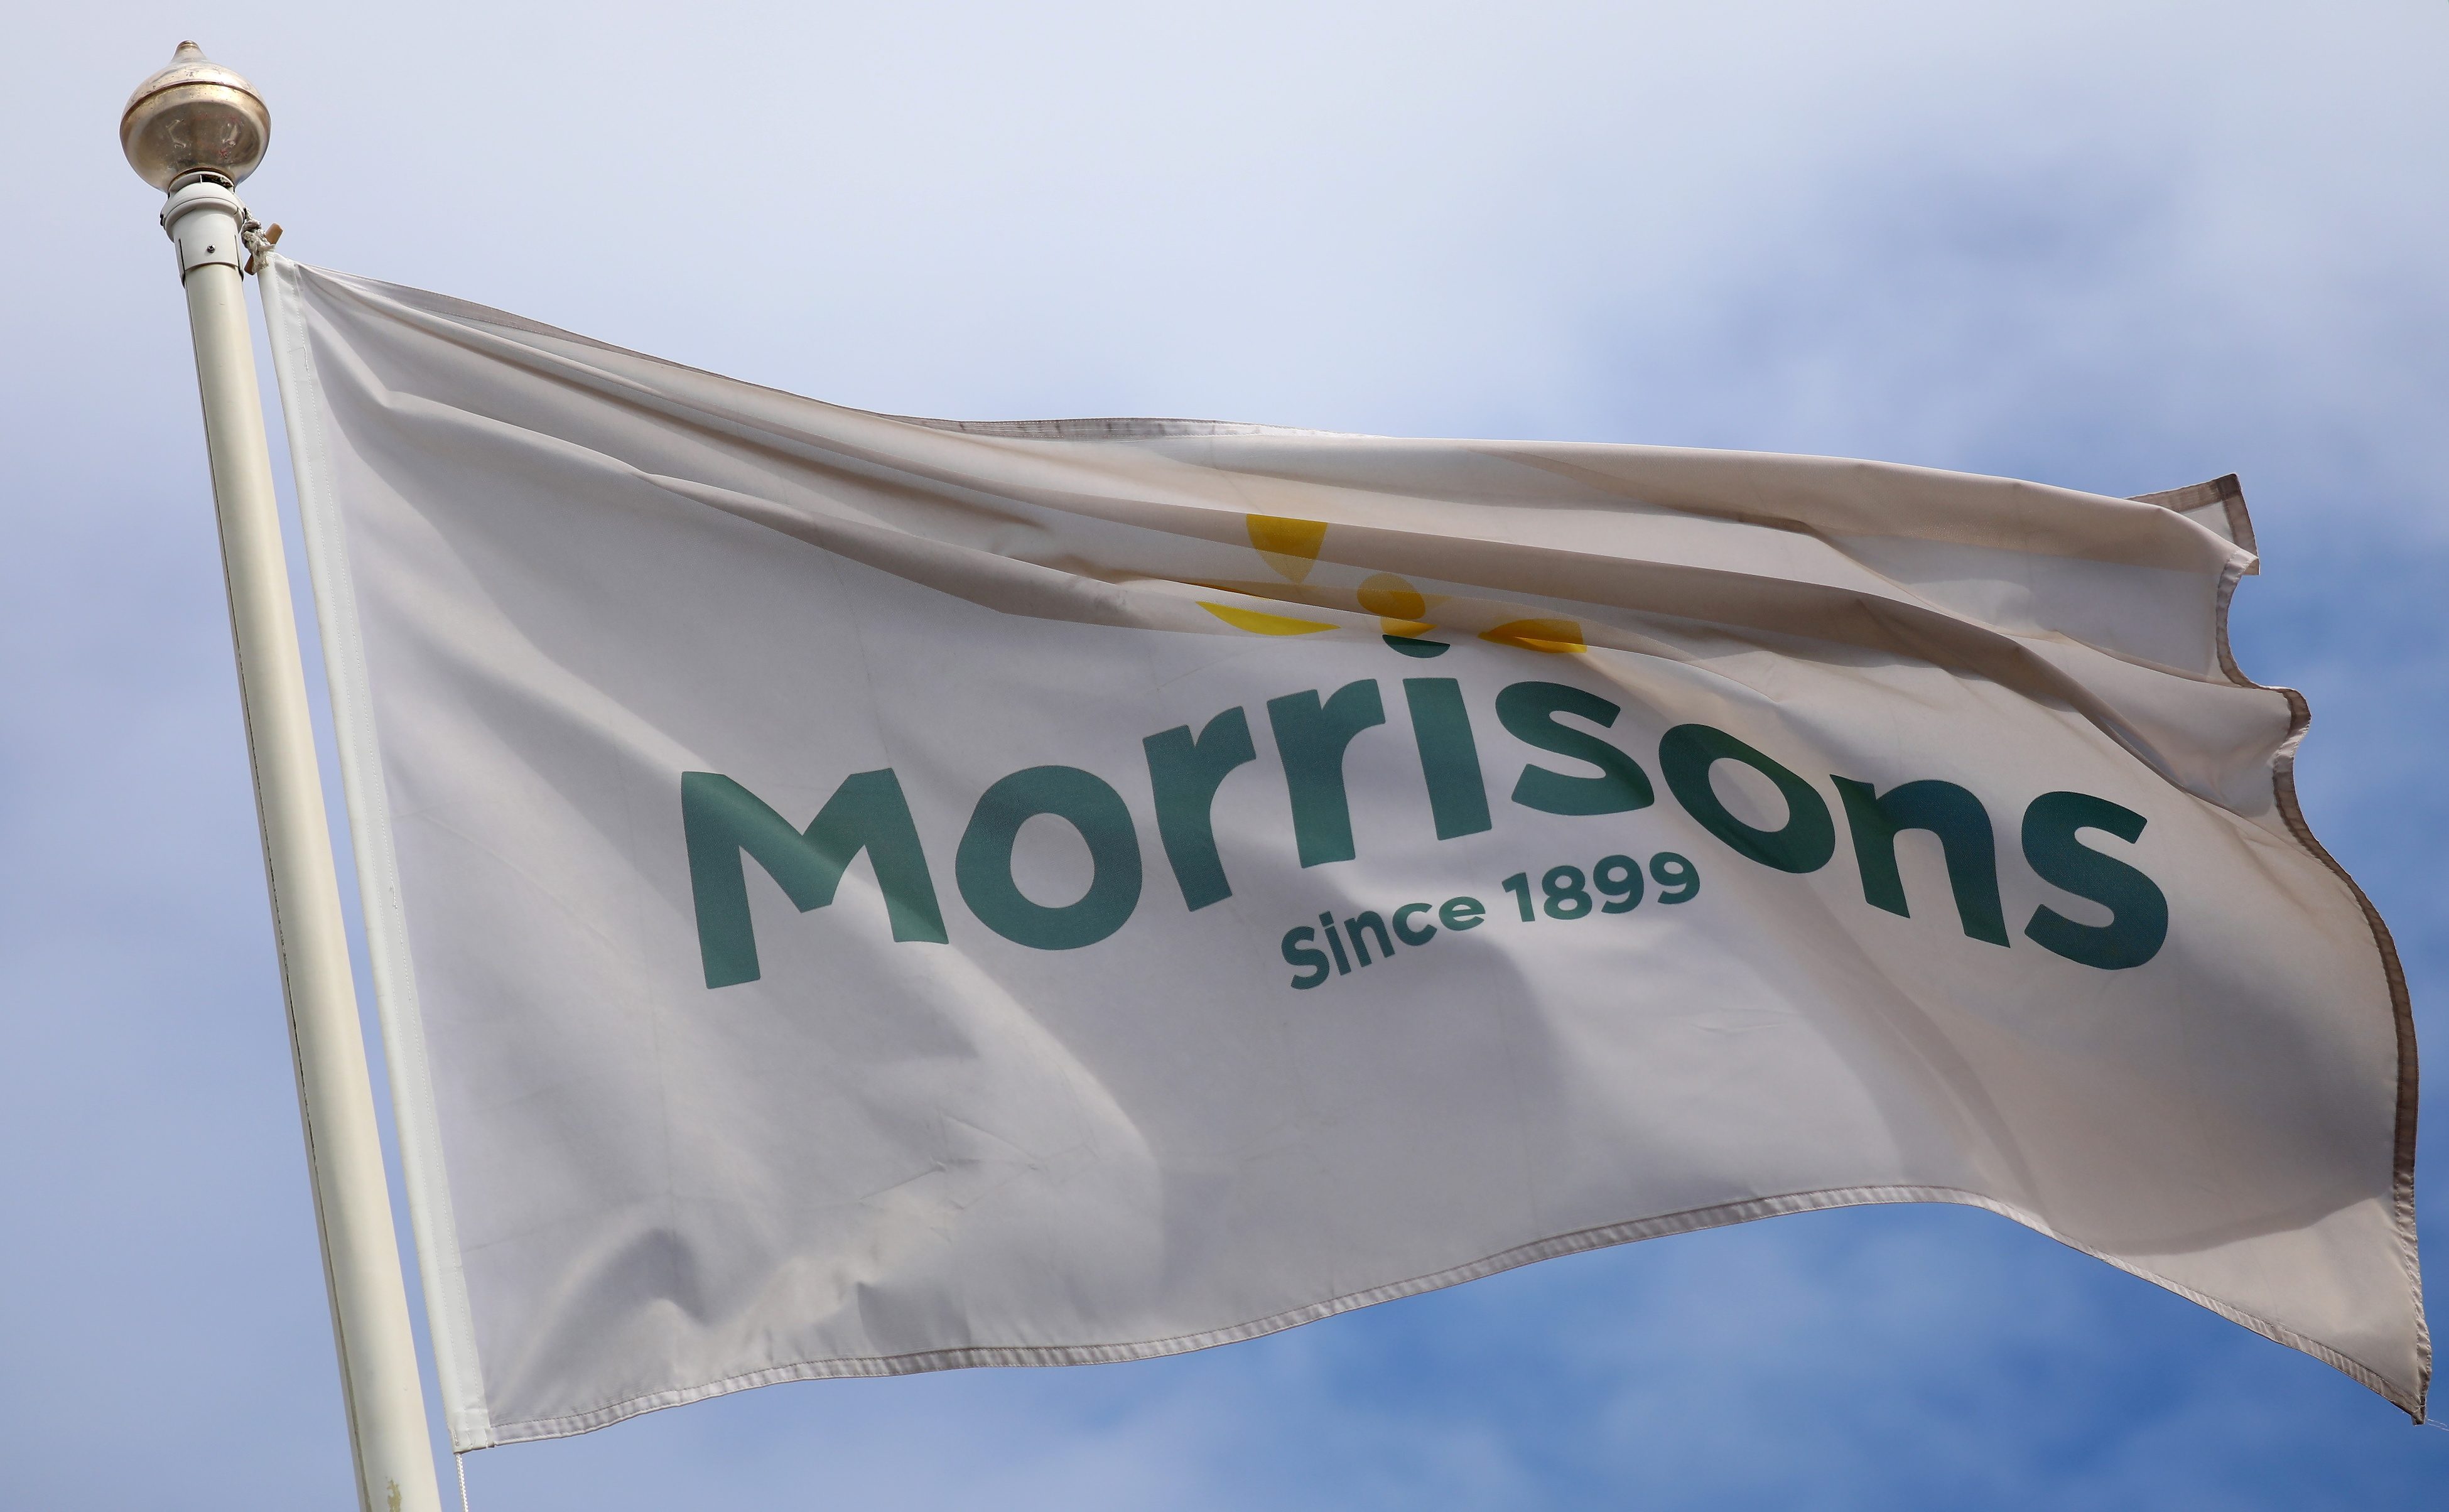 CD&R wins $10-billion auction for UK supermarket Morrisons